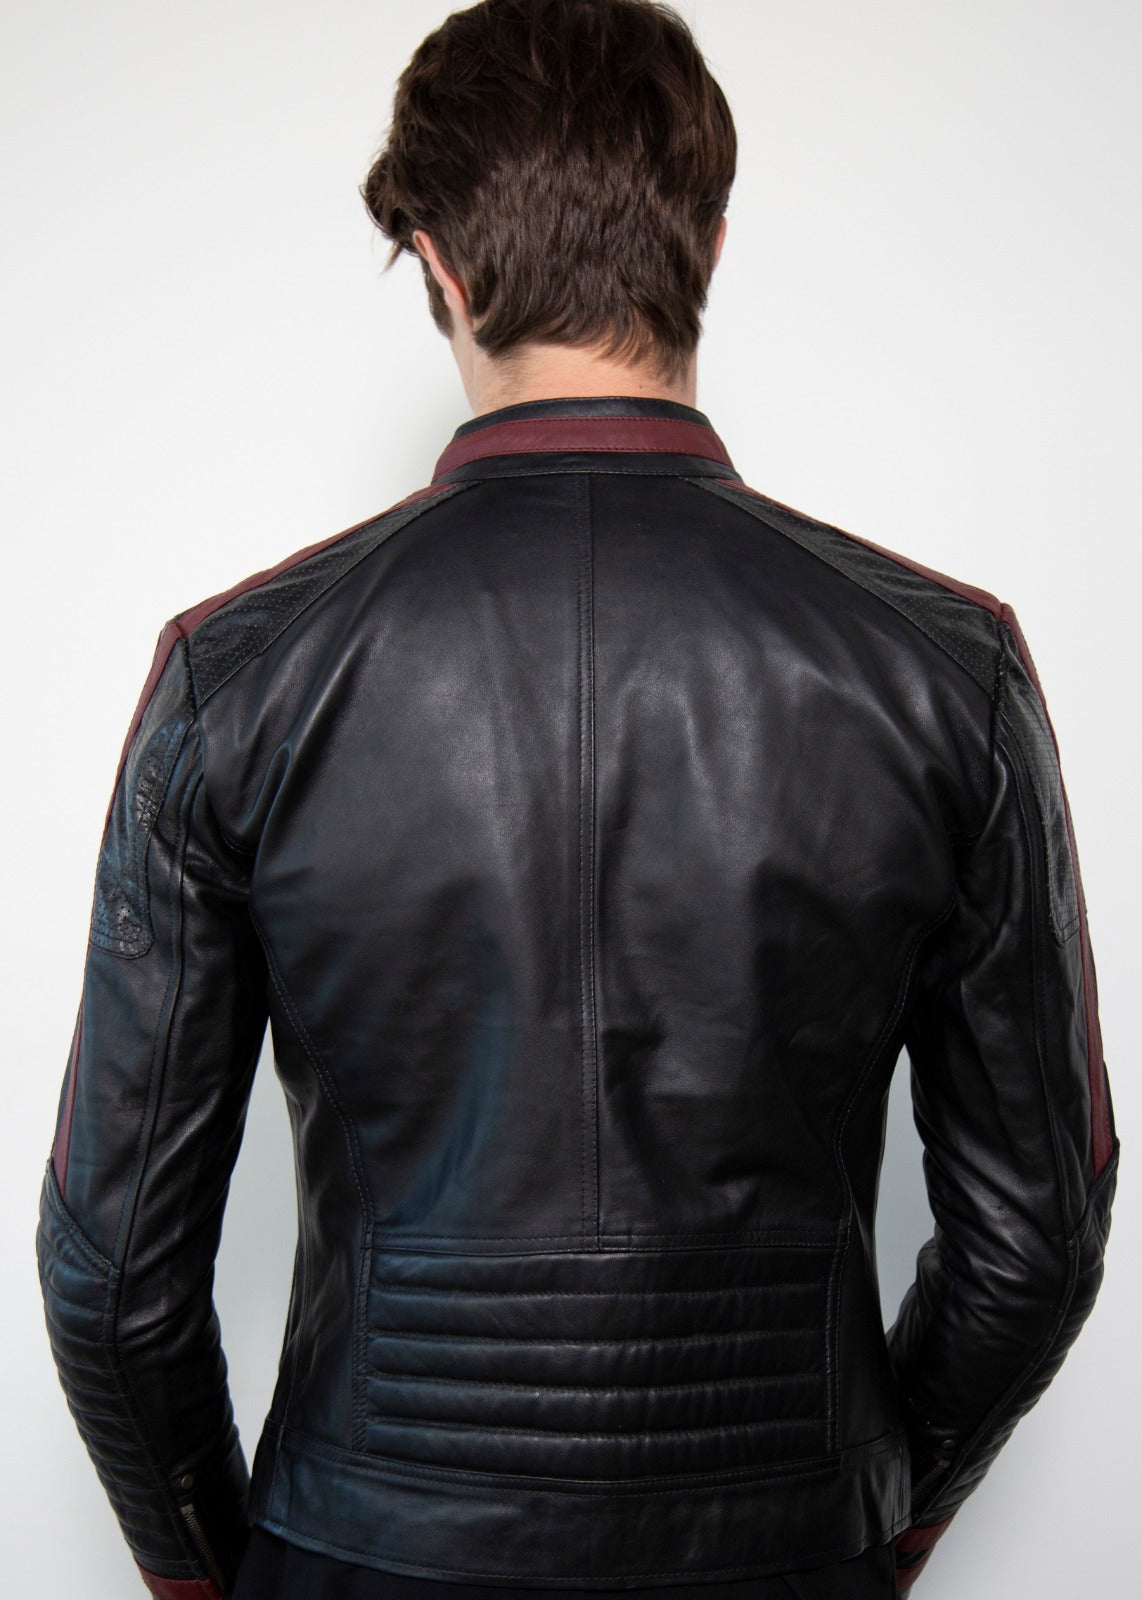 Mens Commander Shepard Mass Effect N7 Leather Jacket